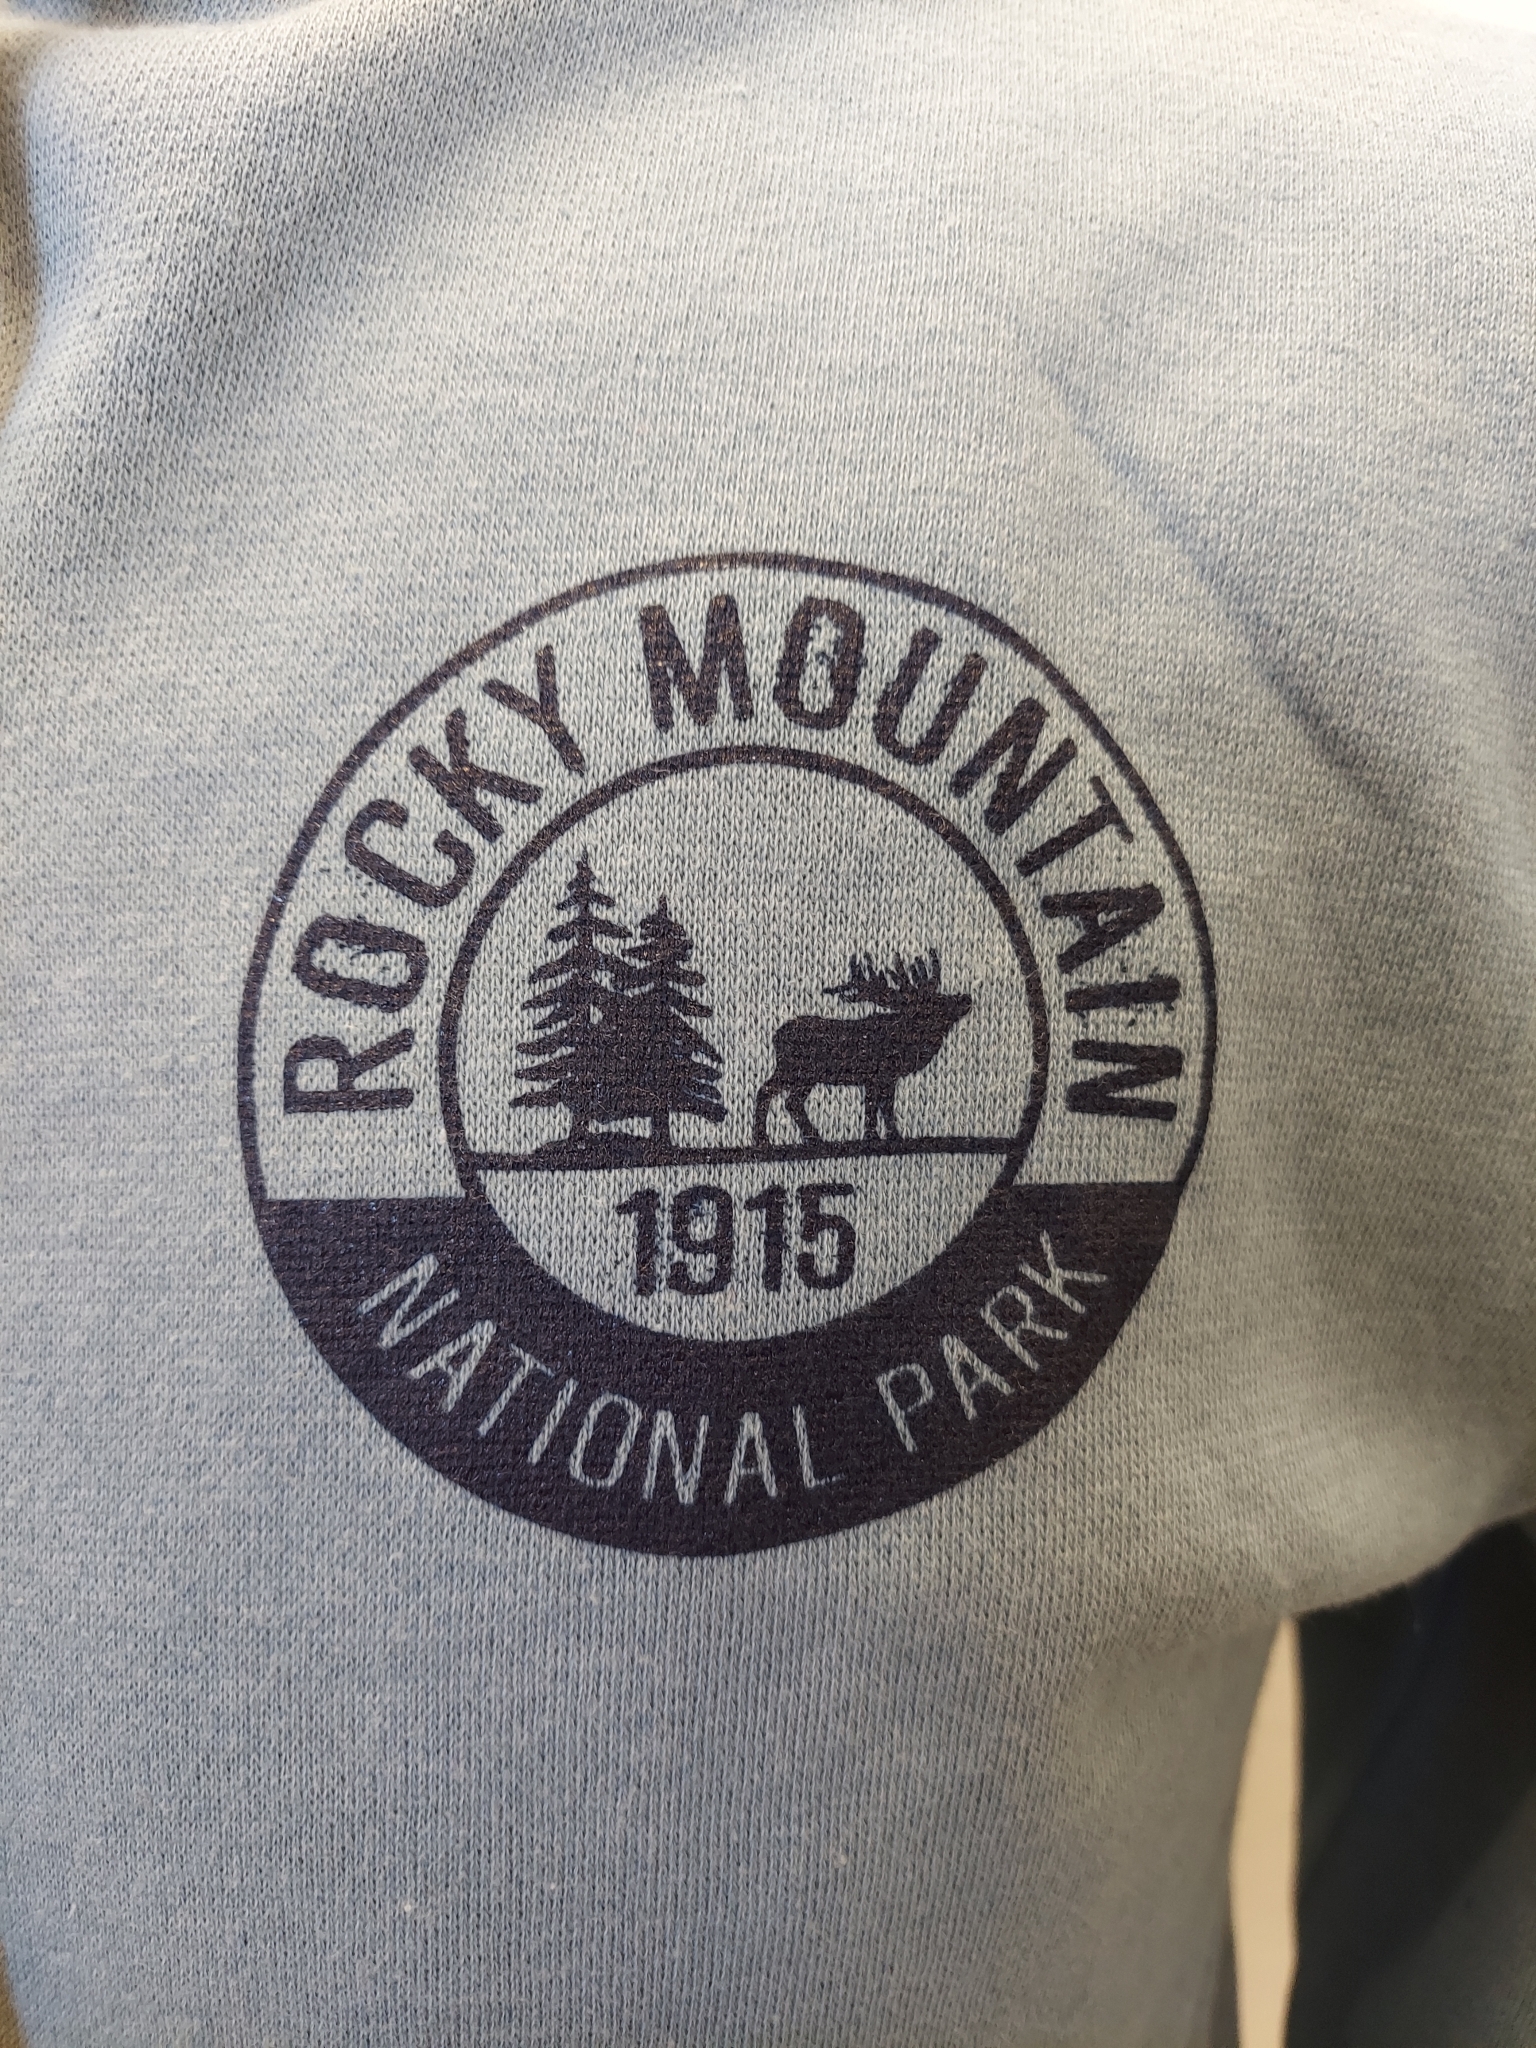 Rocky Mountain National Park logo on a RMNP Zip-Up Blue sweatshirt.